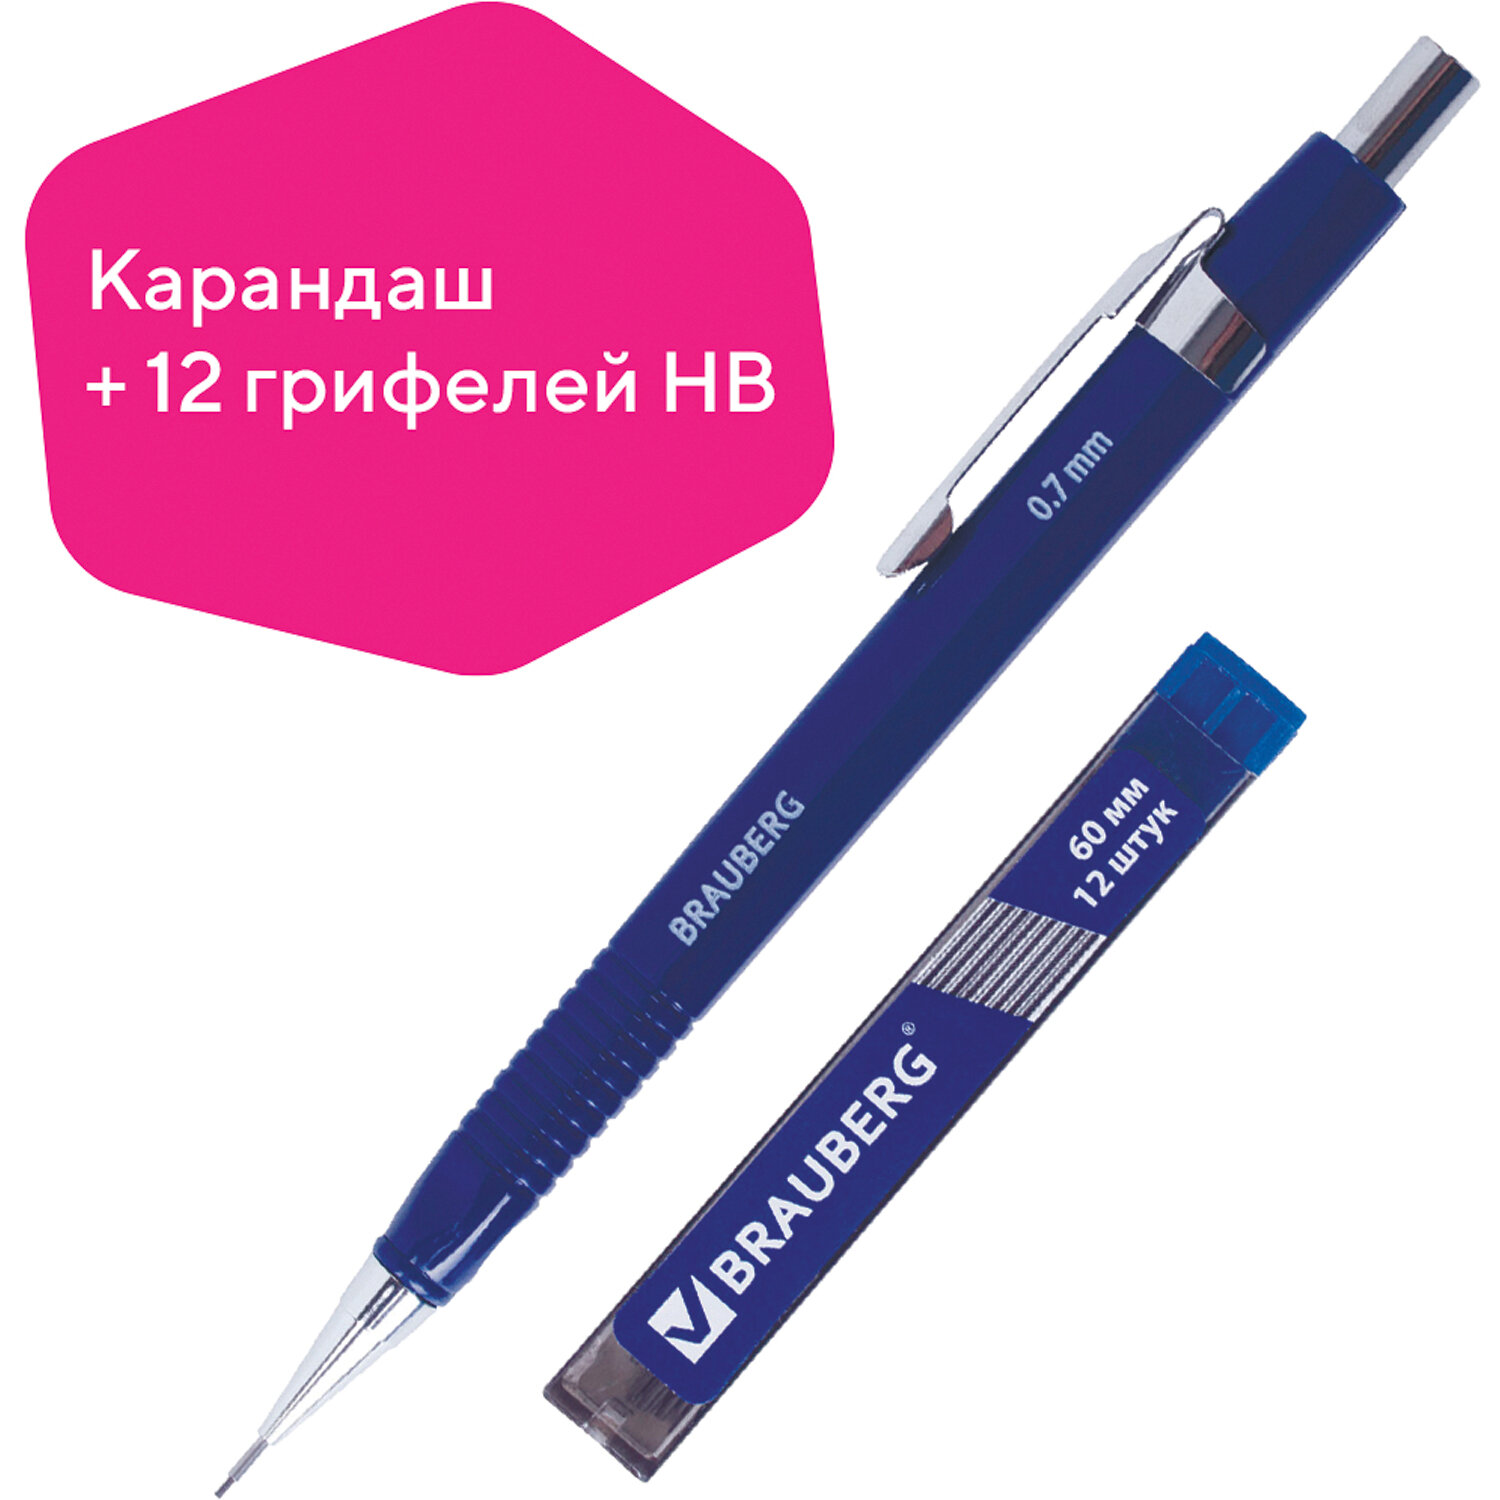 Набор BRAUBERG: механический карандаш, трёхгранный синий корпус + грифели HB, 0,7 мм, 12 штук, блист